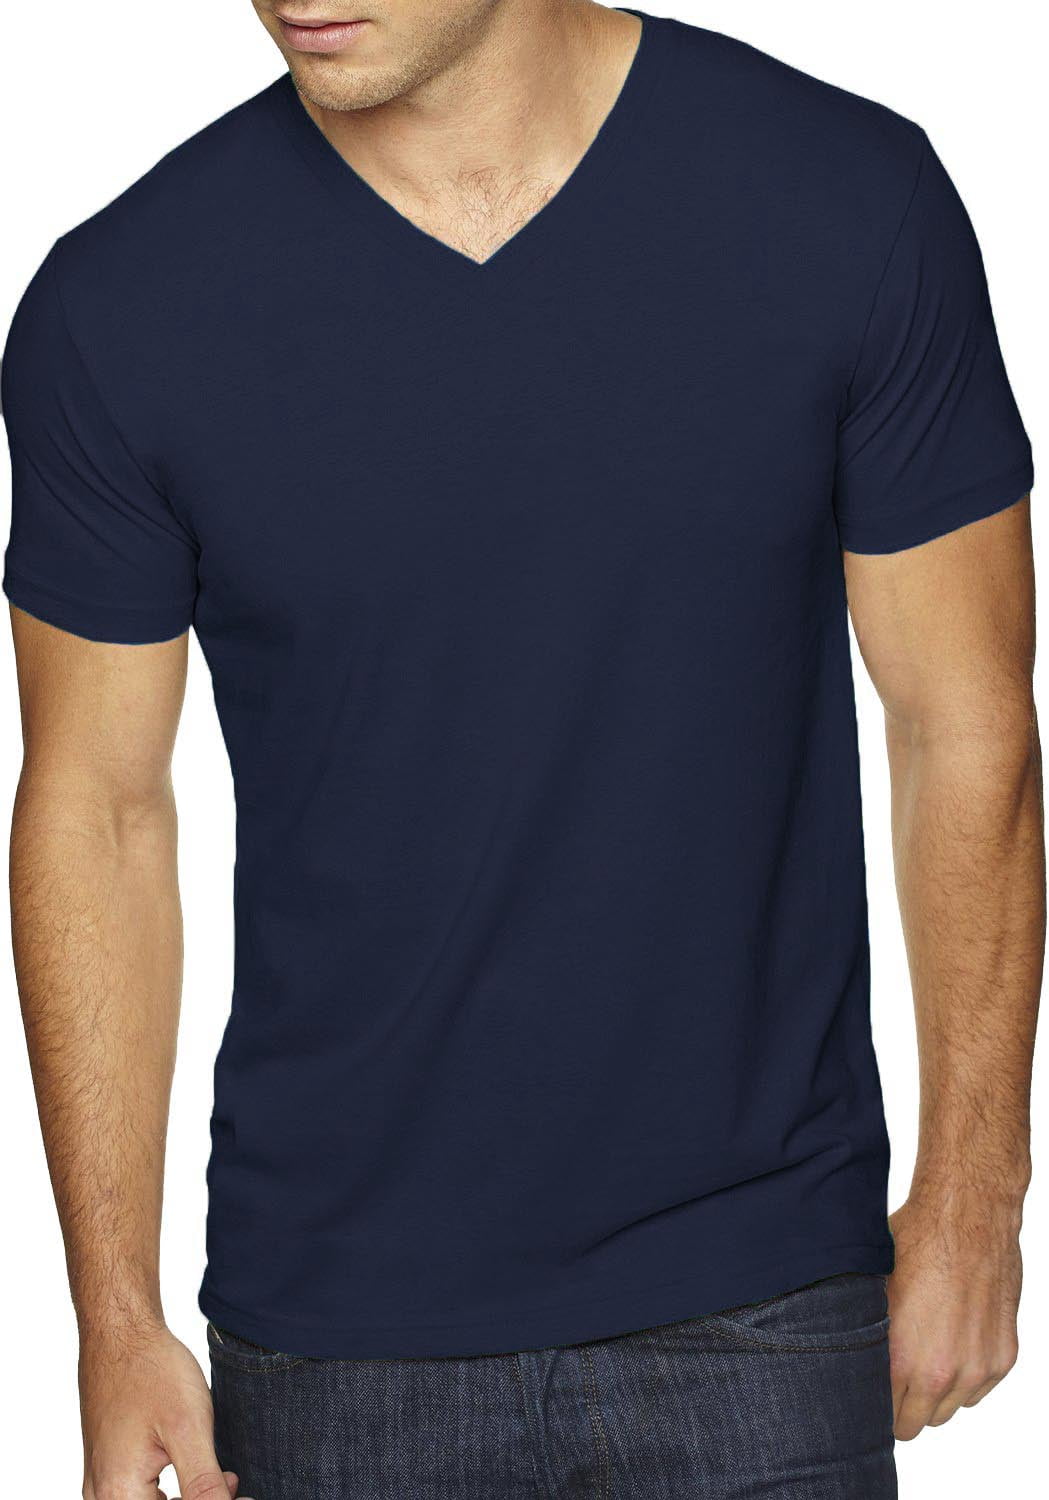 Ma Croix Men's Premium Solid Cotton V Neck T-Shirts Short Sleeve Tee ...